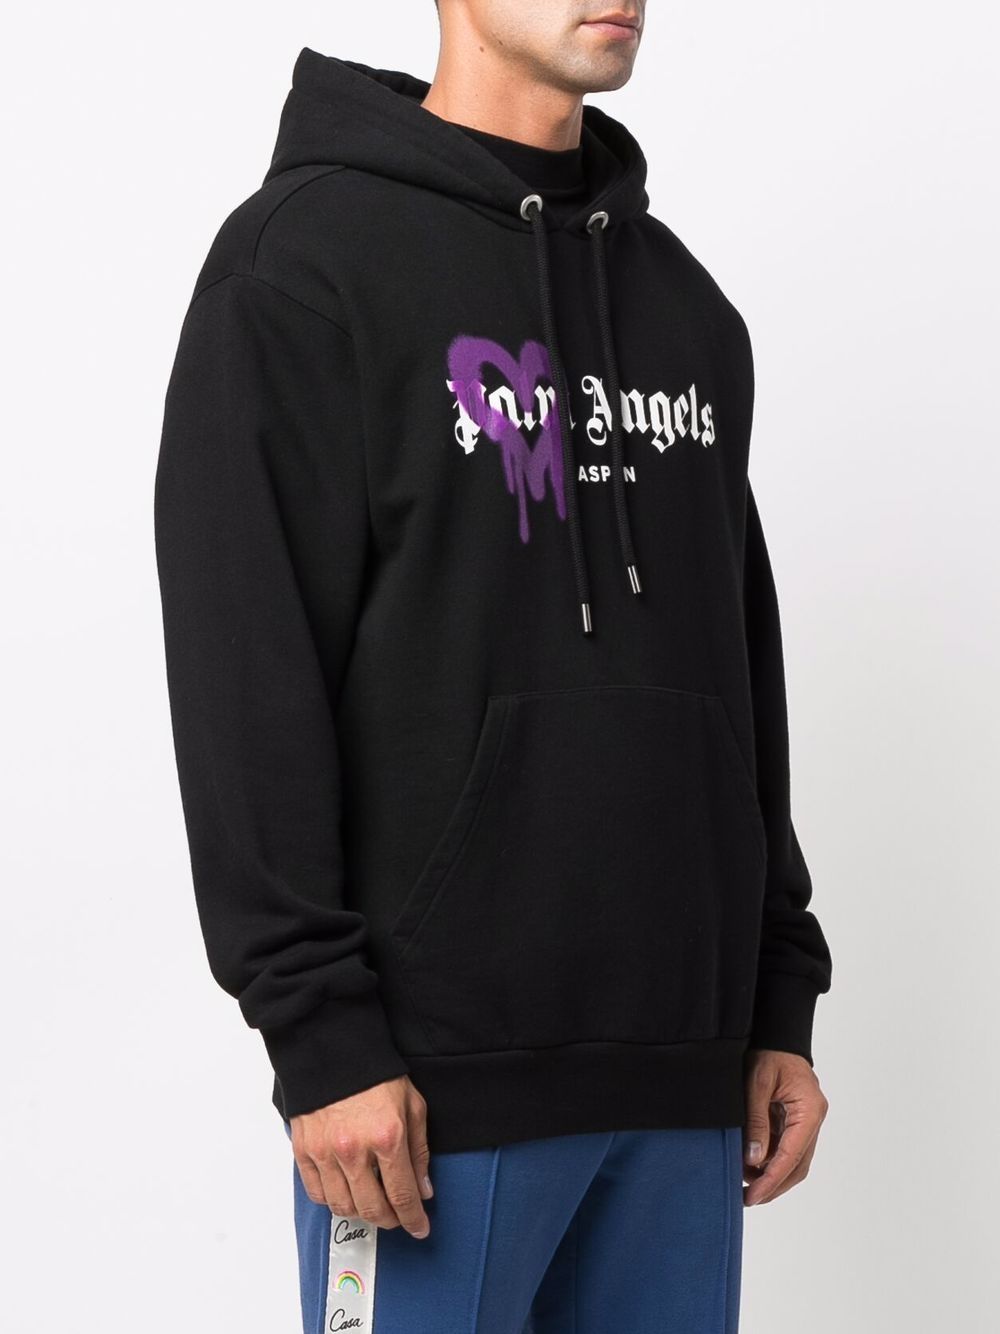 Palm Angels Hoodie Black And Purple Aspen Logo 100% Autentic